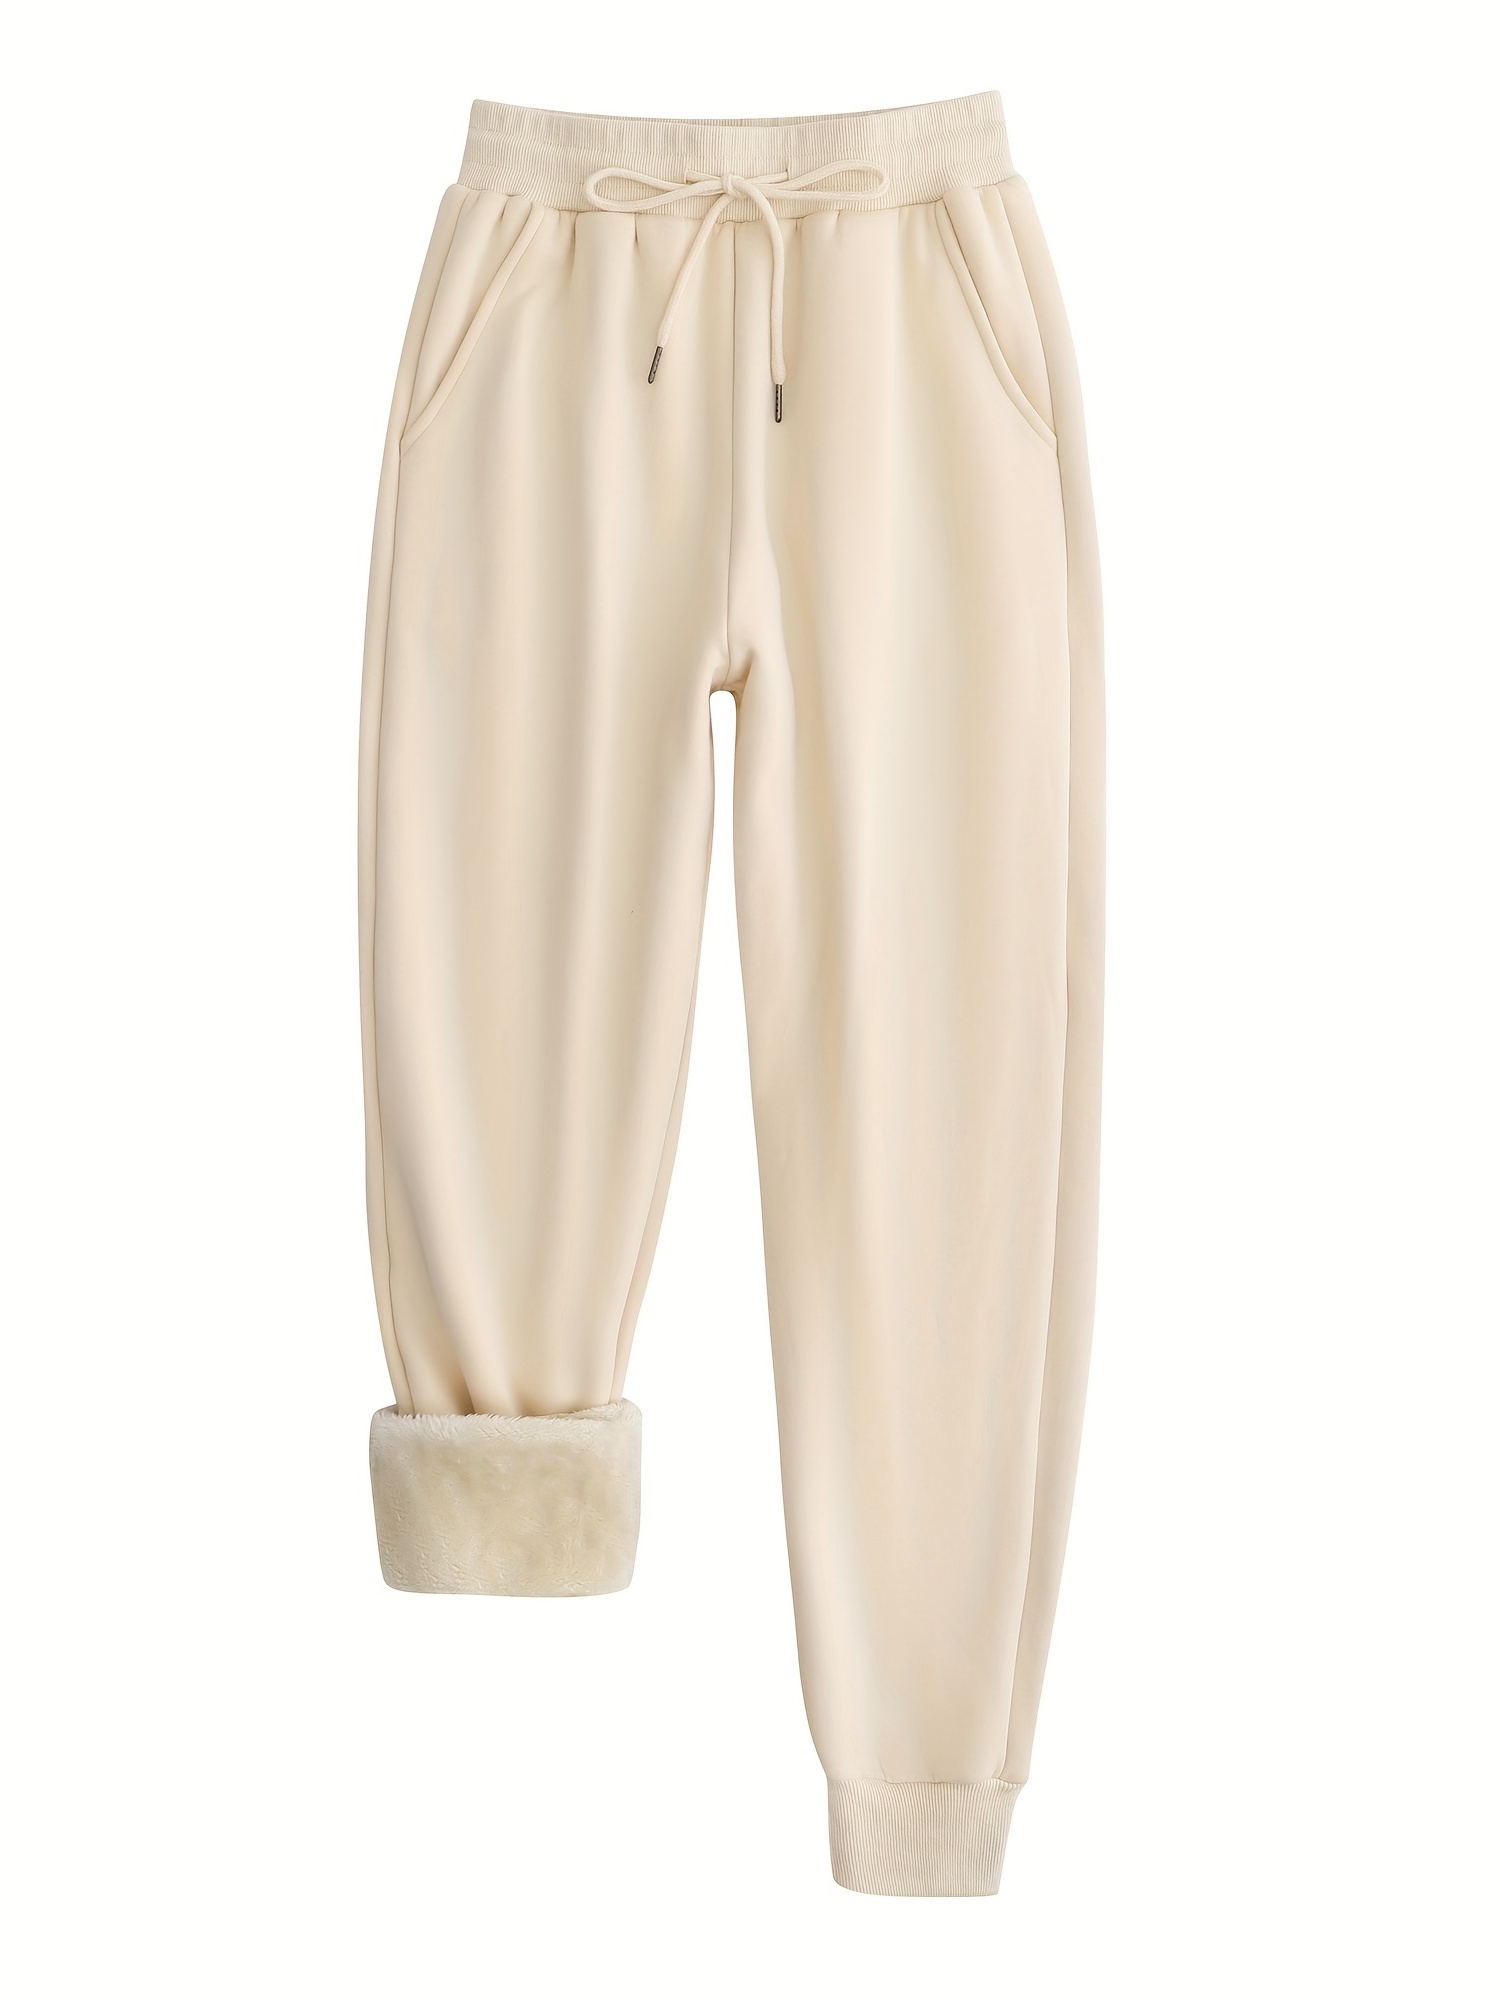 plush thermal pants, winter plush thermal pants casual drawstring pocket pants womens clothing details 0